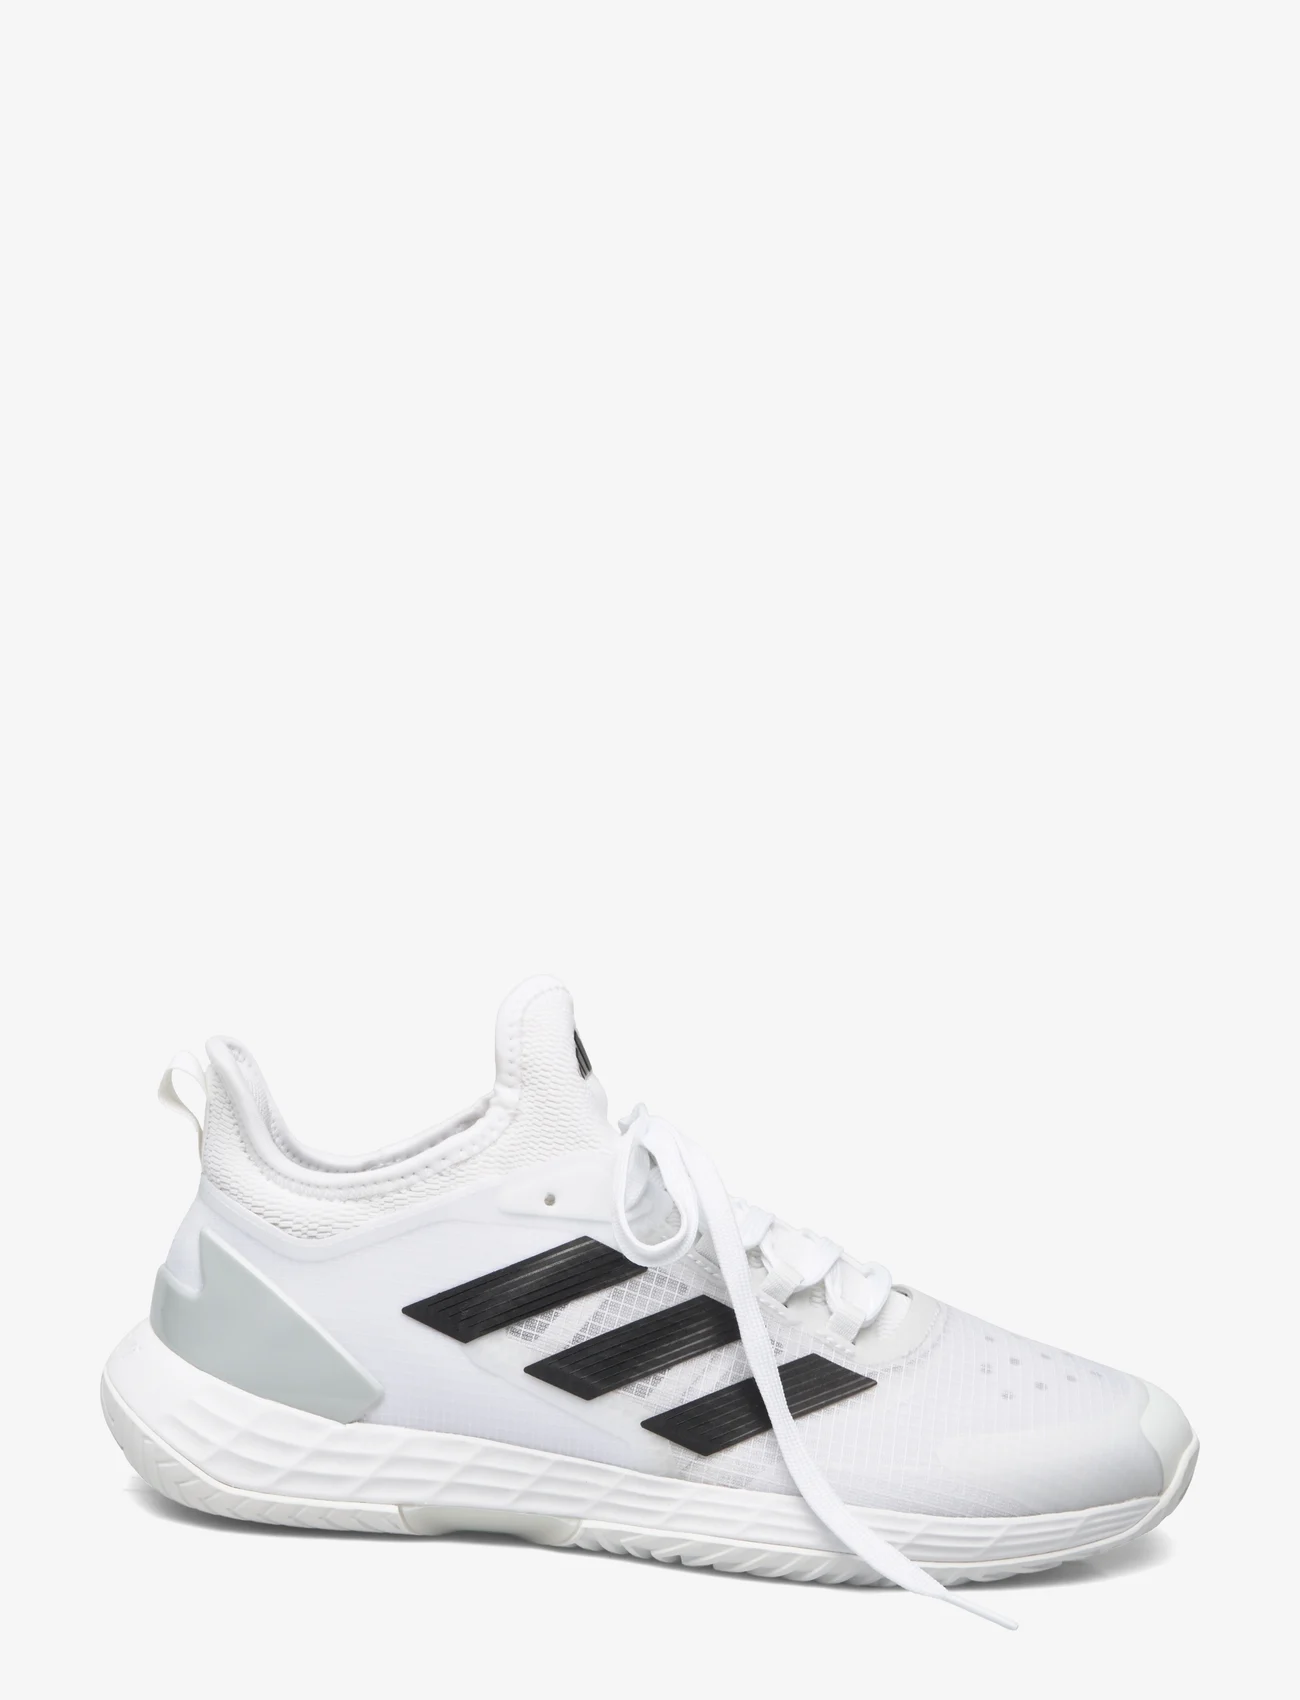 adidas Performance - ADIZERO UBERSONIC 4.1 M - racketsports shoes - 000/white - 1